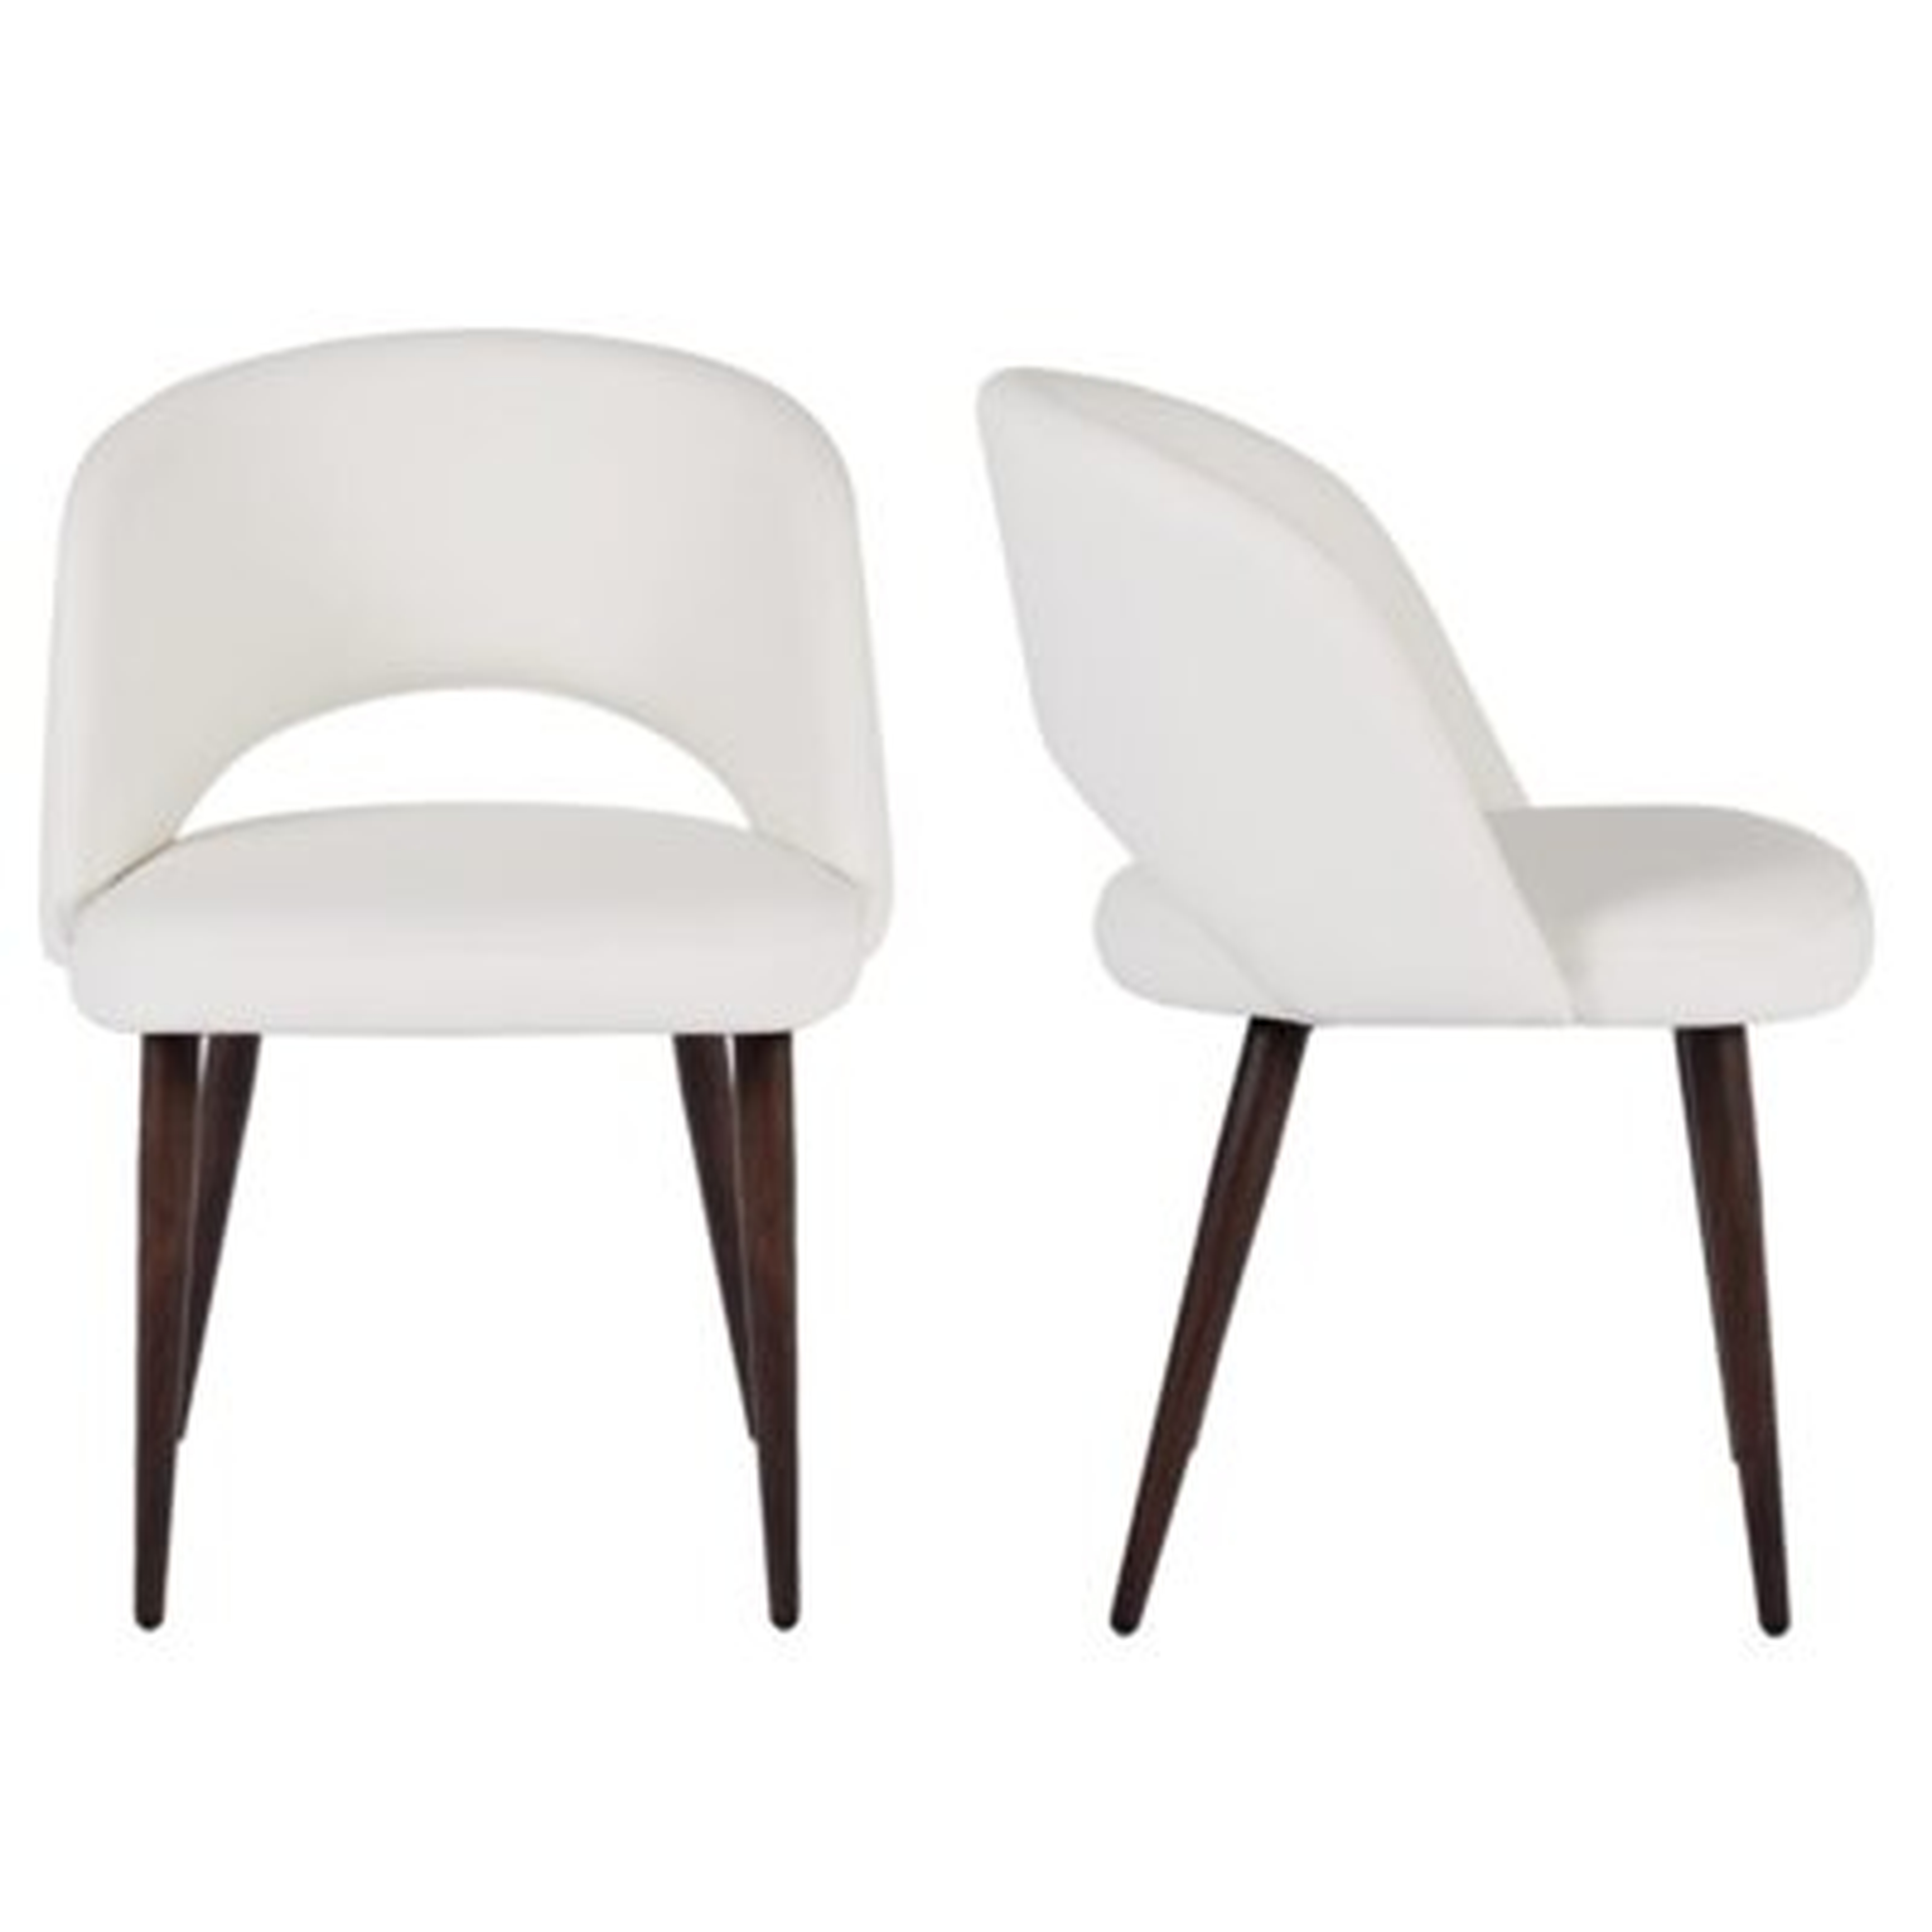 Maust Upholstered Dining Chair (Set of 2) - Wayfair